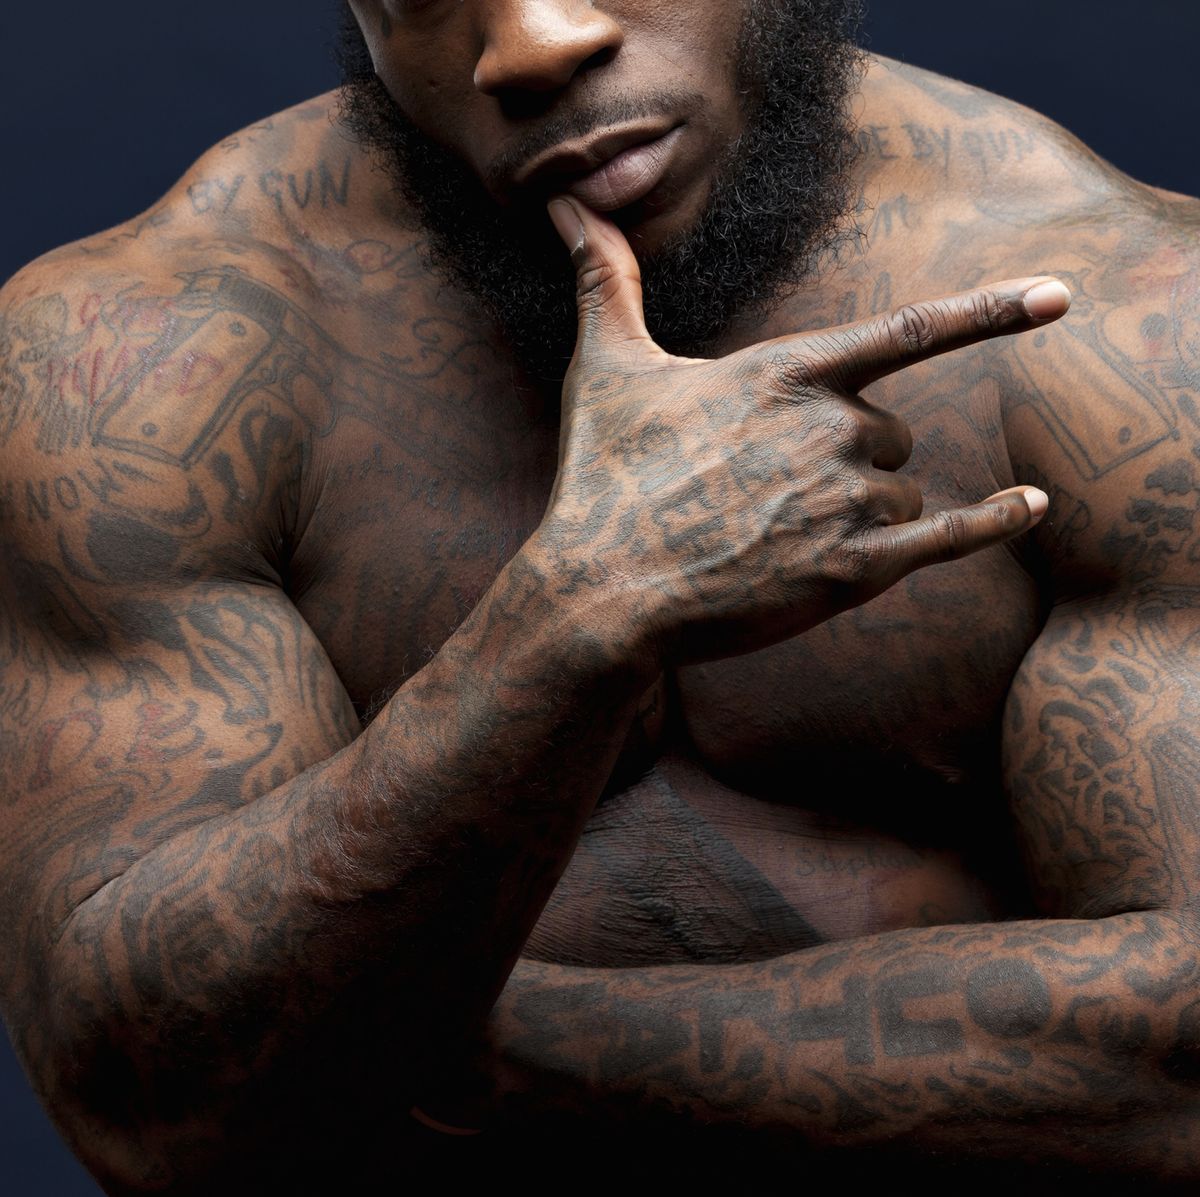 Tattoos For Dark Skin - Experts Weigh In On Tattoo Myths For Darker Skin